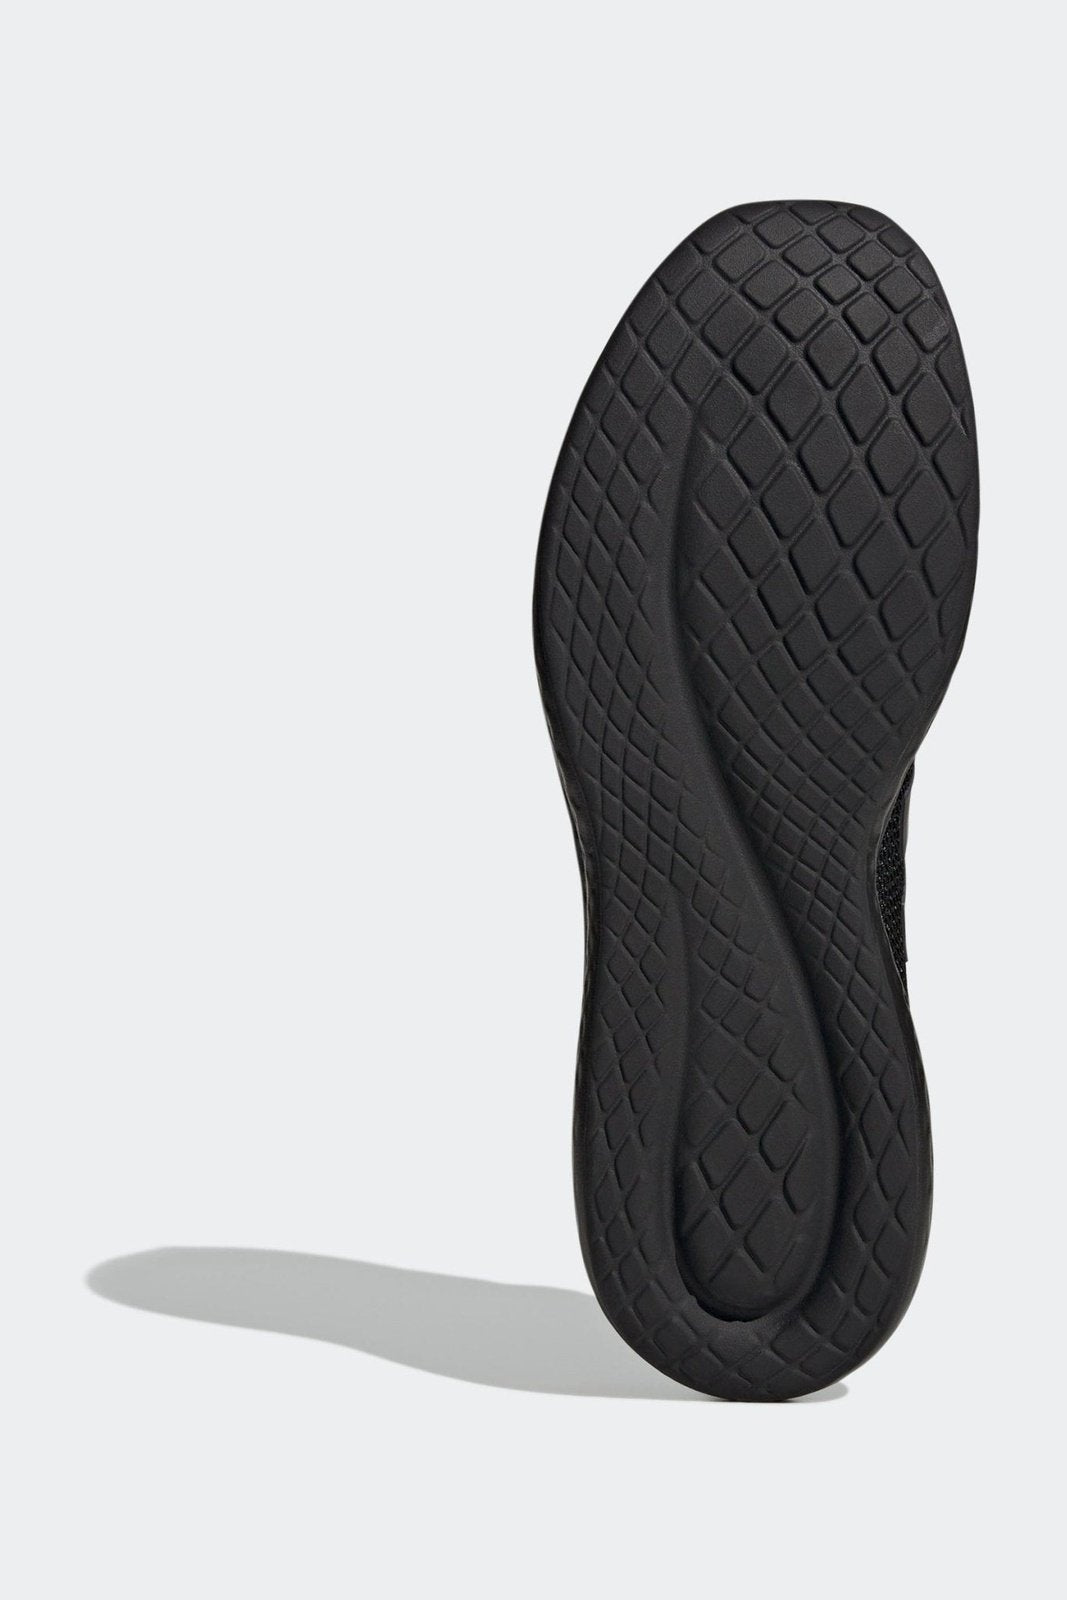 ADIDAS - נעלי ספורט לגברים FLUIDFLOW 3.0 בצבע שחור - MASHBIR//365